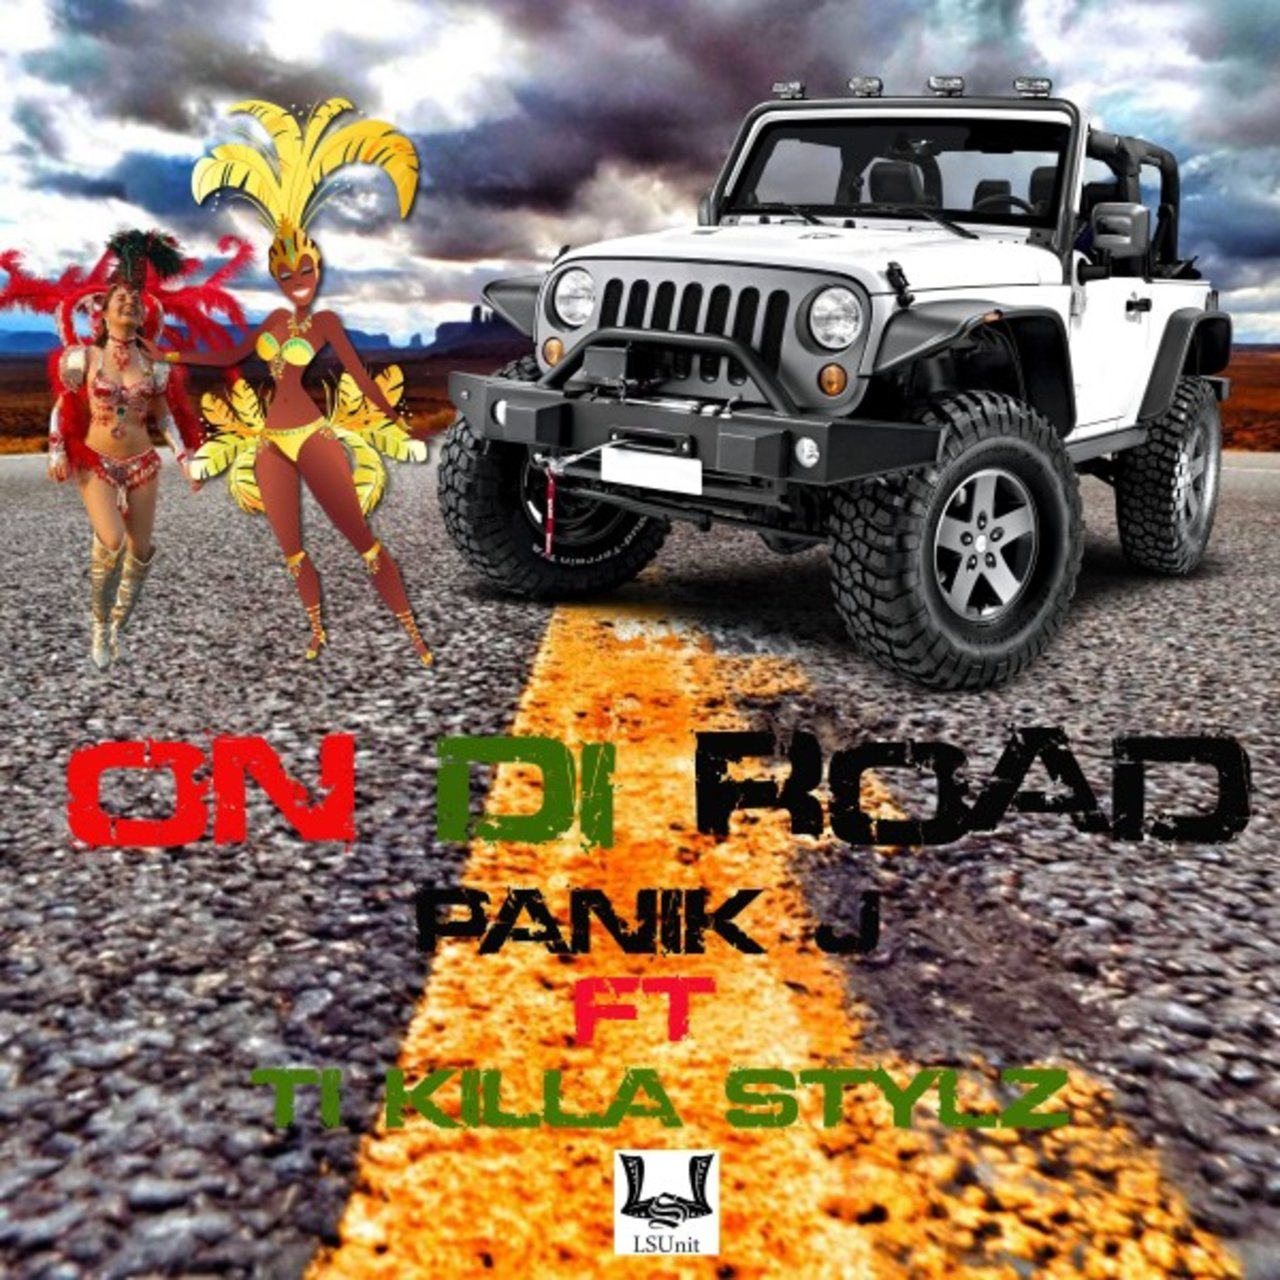 Panik-J - On Di Road (ft. Ti Killa Stylz) (Cover)